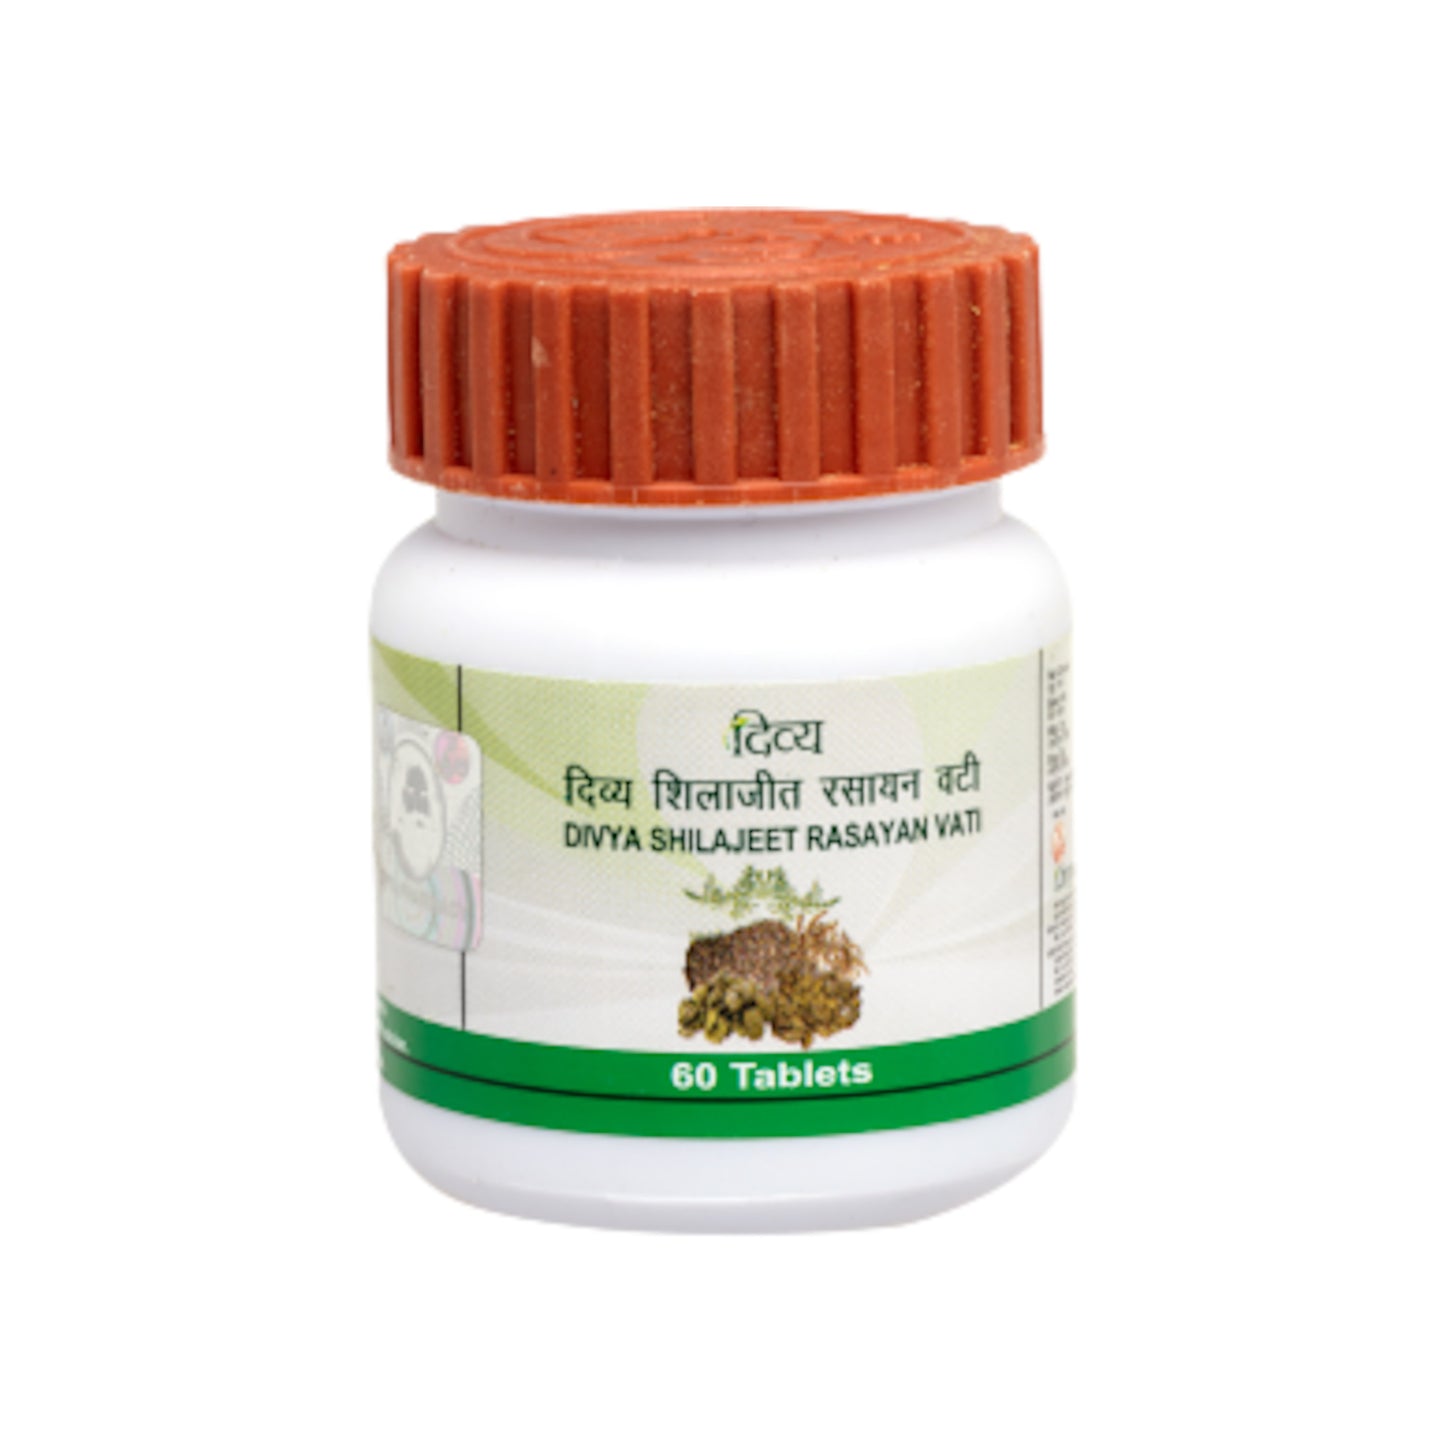 Image: Divya Patanjali Shilajeet Rasayan Vati 60 Tablets Herbal remedy for male sexual health, increasing sperm count and libido.